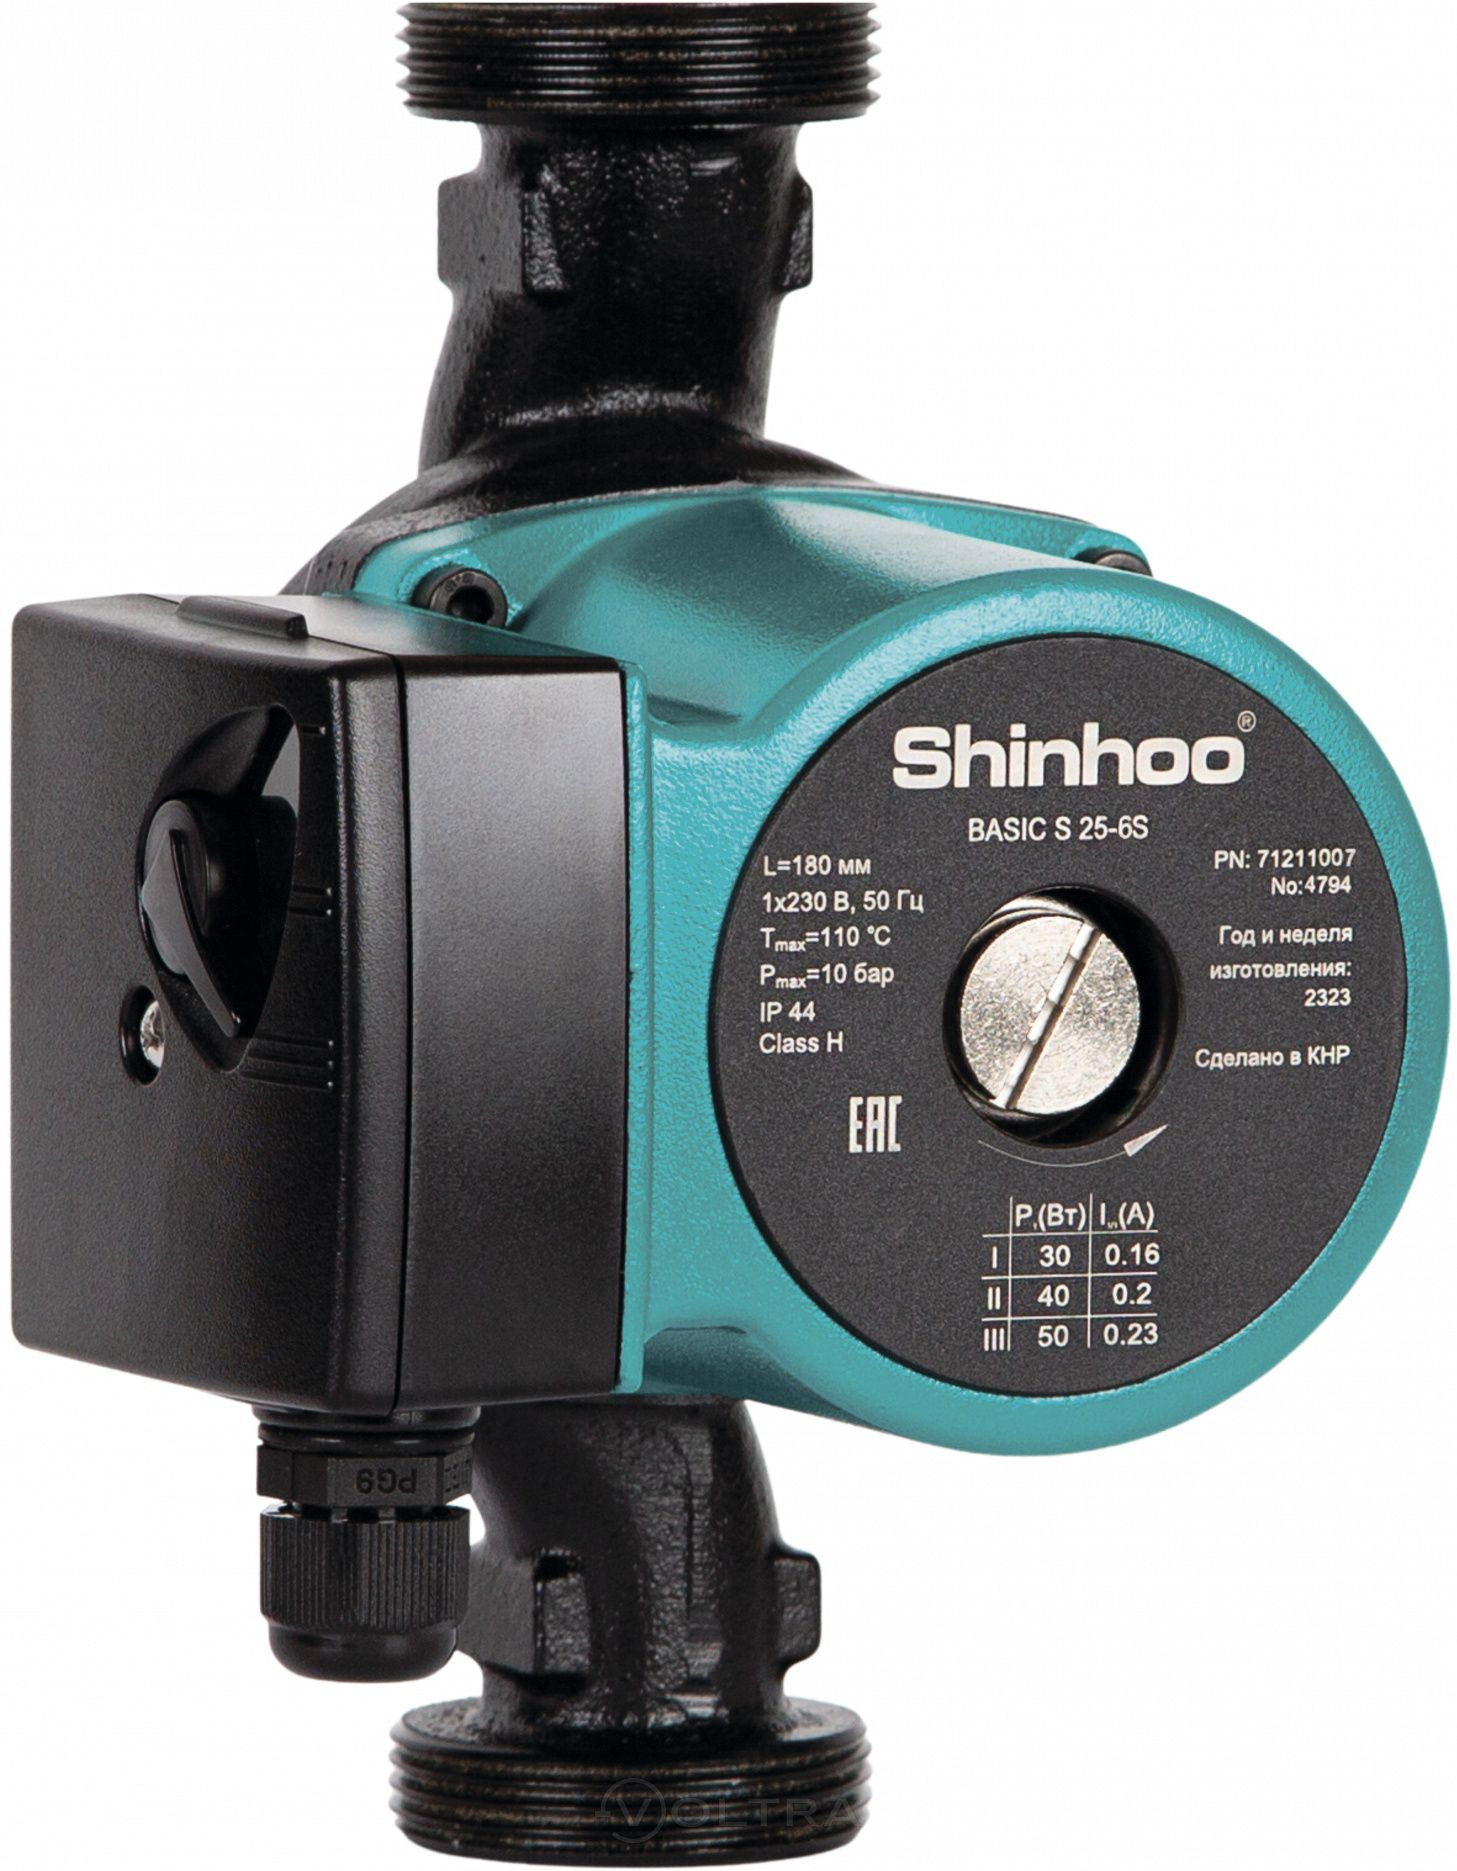 SHINHOO BASIC S 25-8S 180